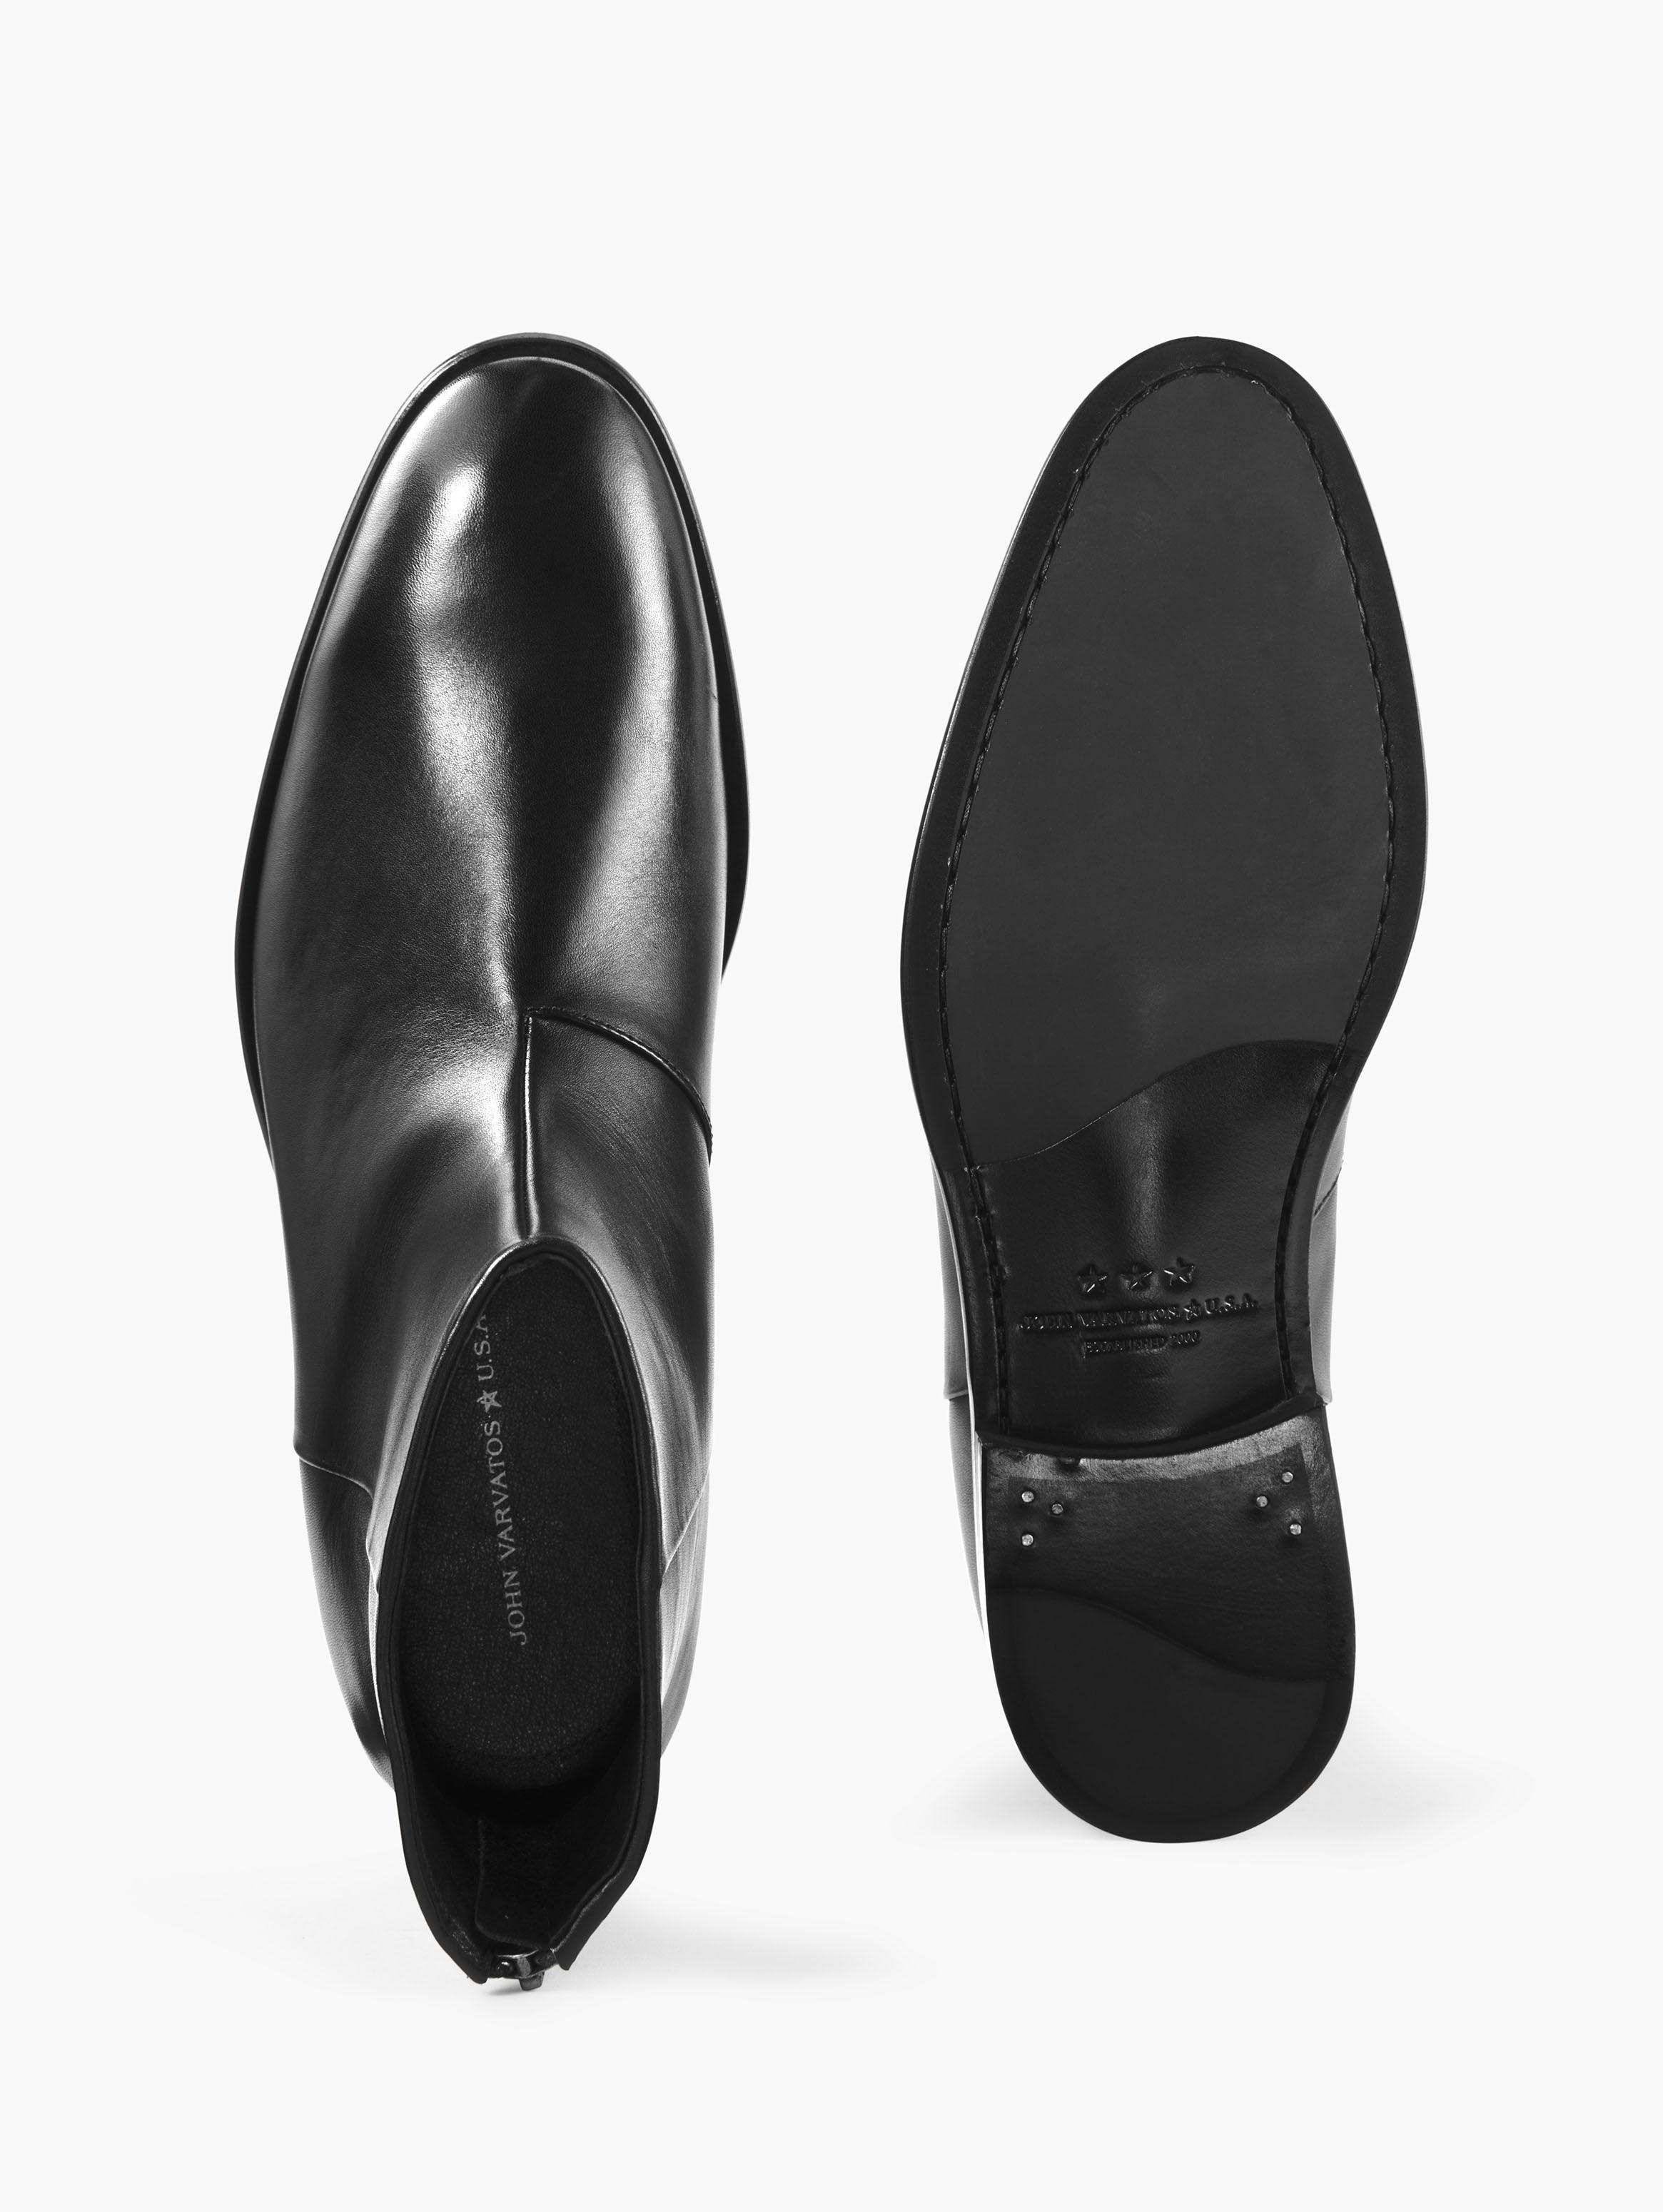 John Varvatos Leather Nyc Back Zip Boot in Black for Men - Lyst